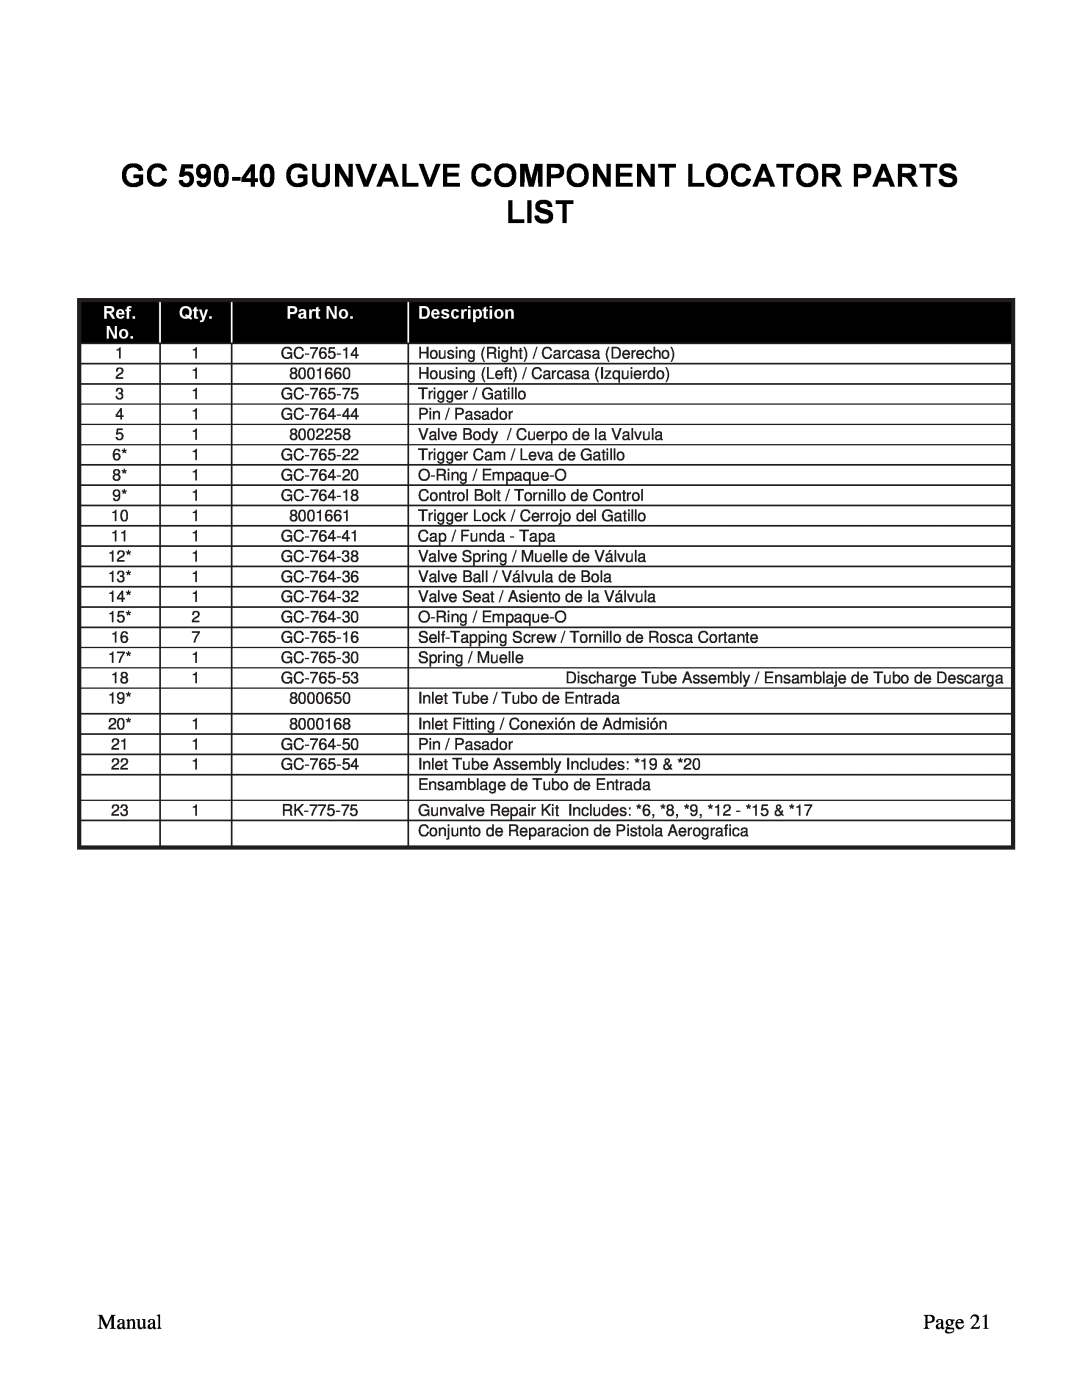 ACDelco PN 09301 A manual GC 590-40 GUNVALVE COMPONENT LOCATOR PARTS LIST, Manual, Page, Description 